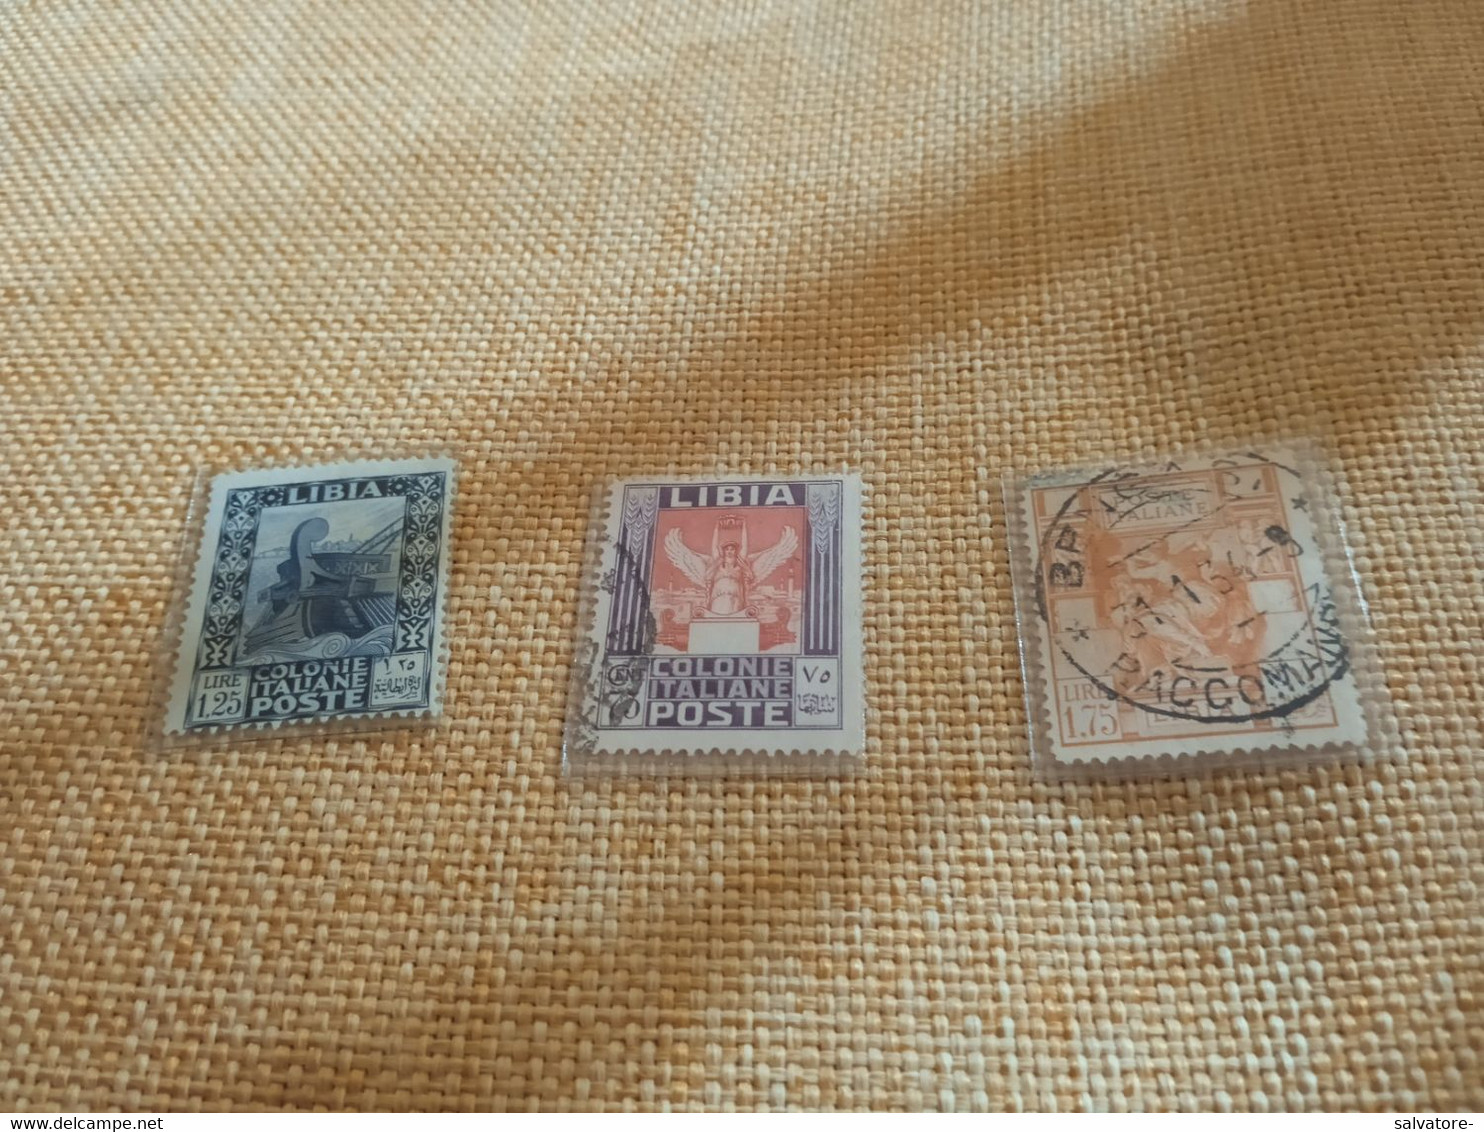 Francobolli LIBIA VALORI LIRE 1,75,1,25,75 CENTESIMI- ANNULLATI - Libië